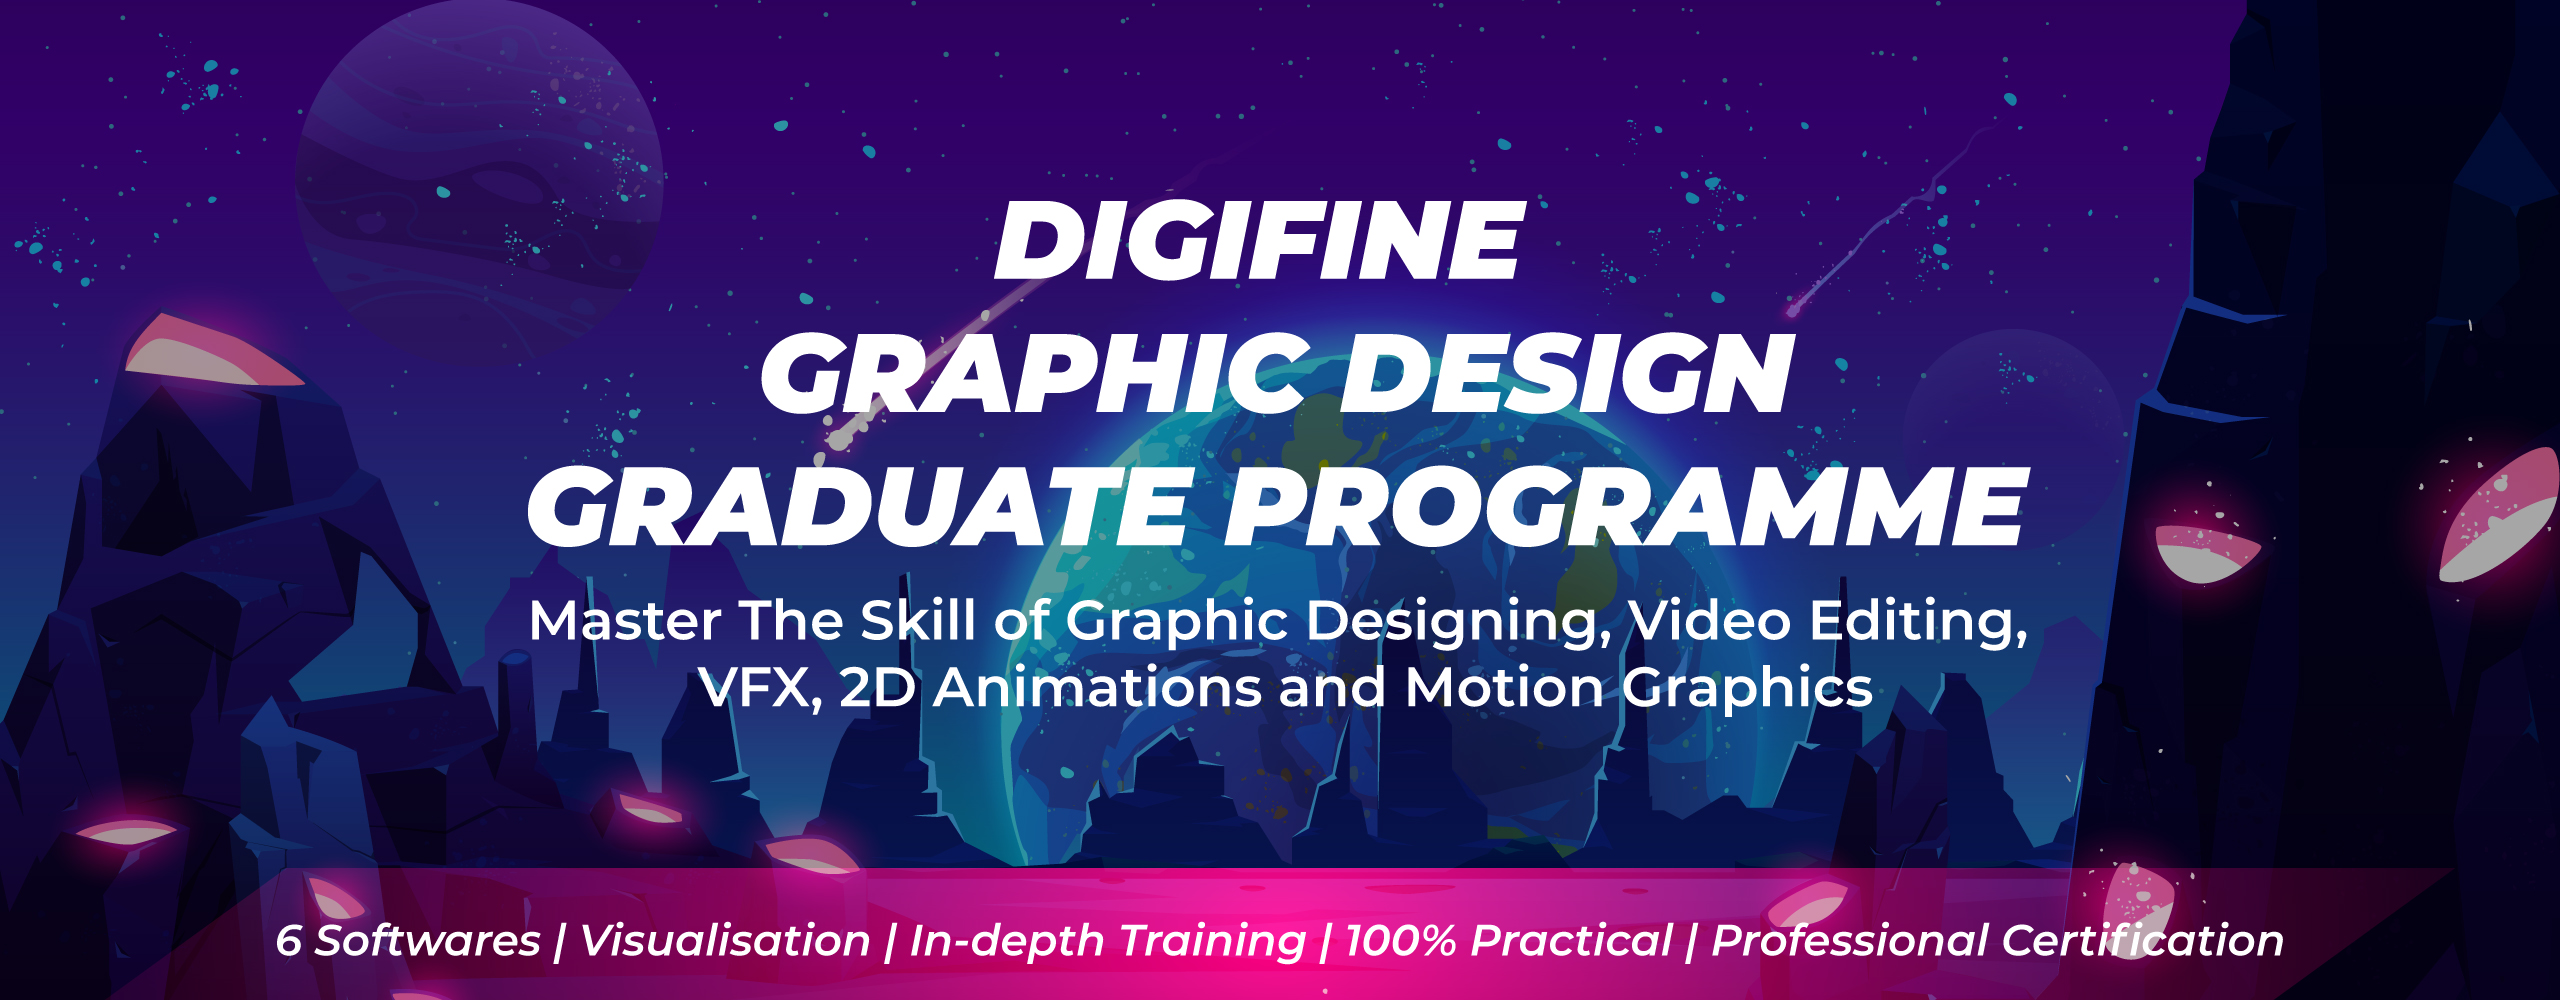 Advanced-Graphic-design-course-in-Mumbai-banner-image2